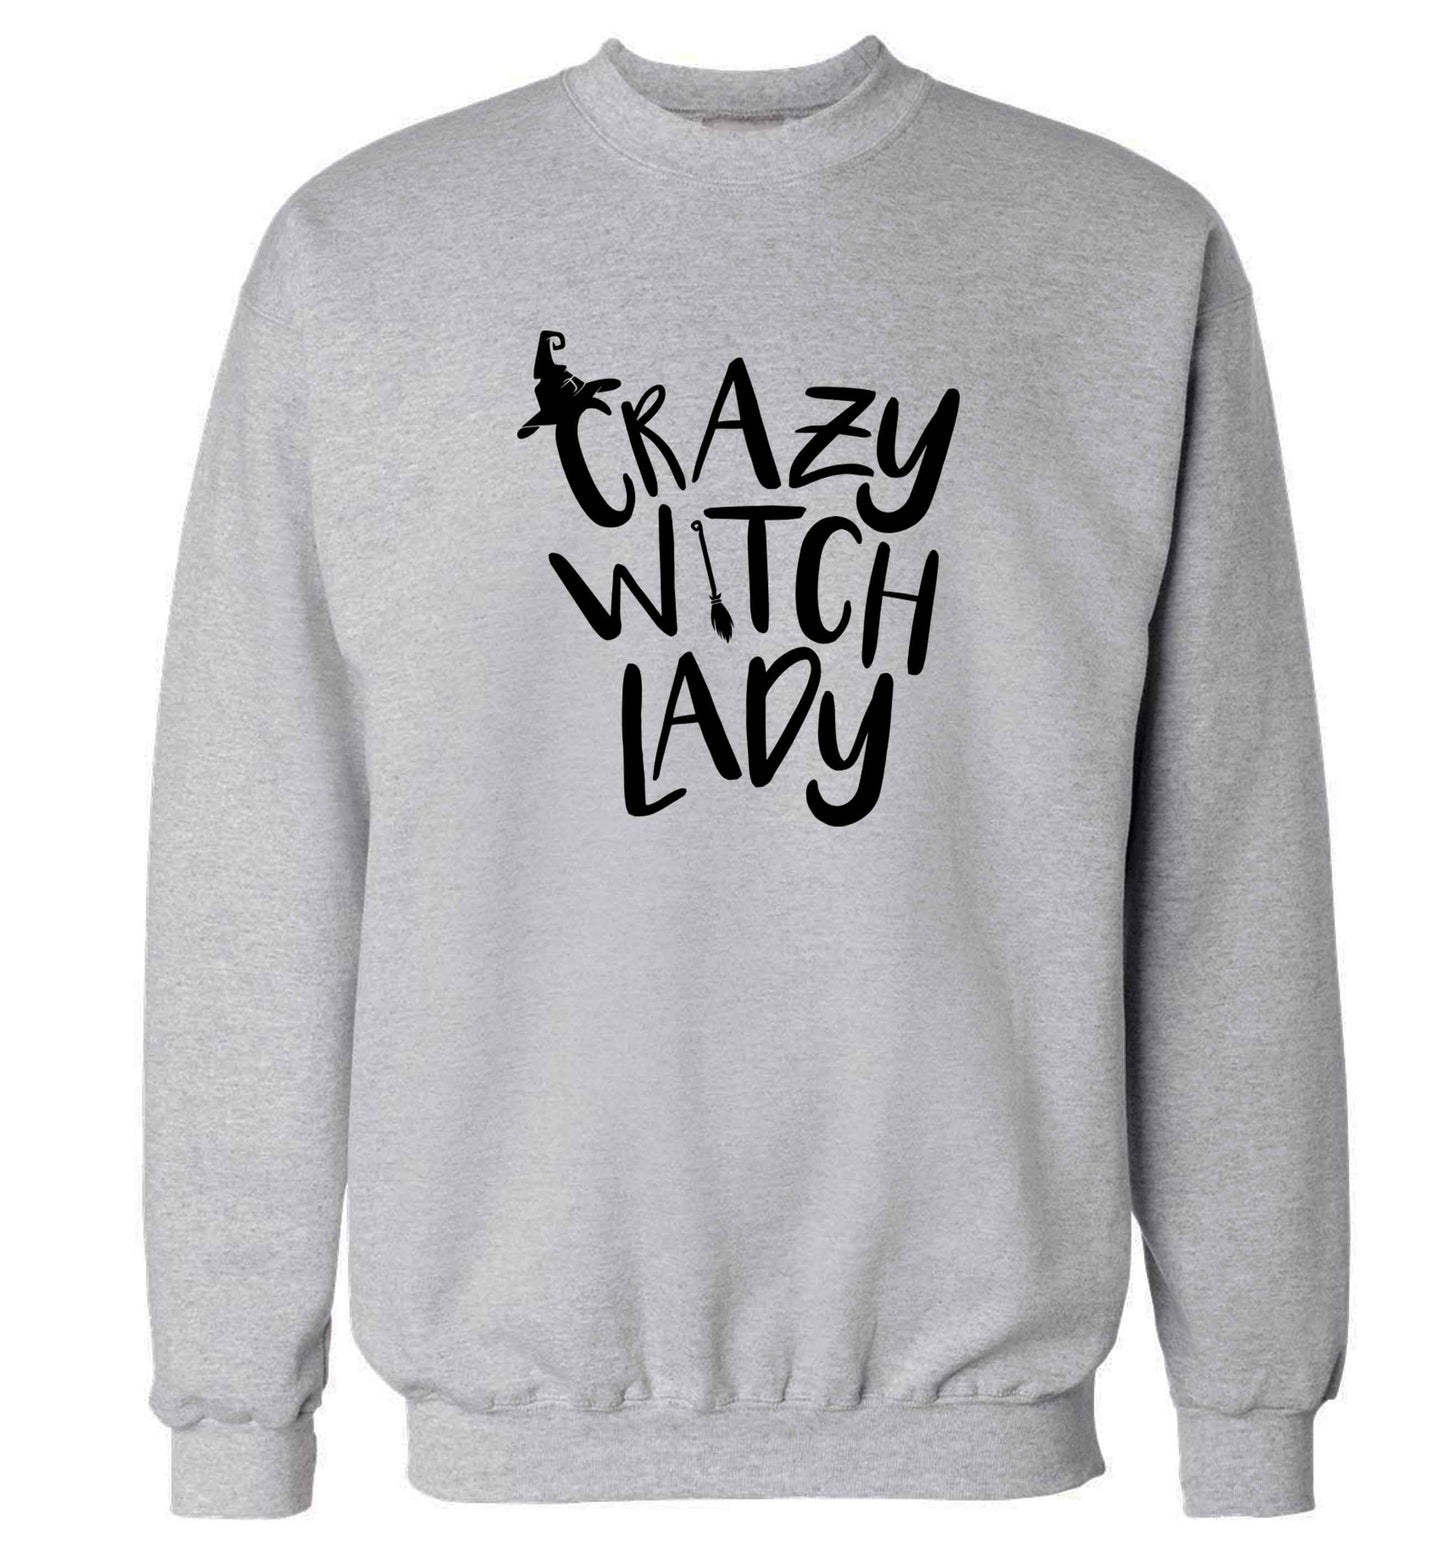 Crazy witch lady adult's unisex grey sweater 2XL